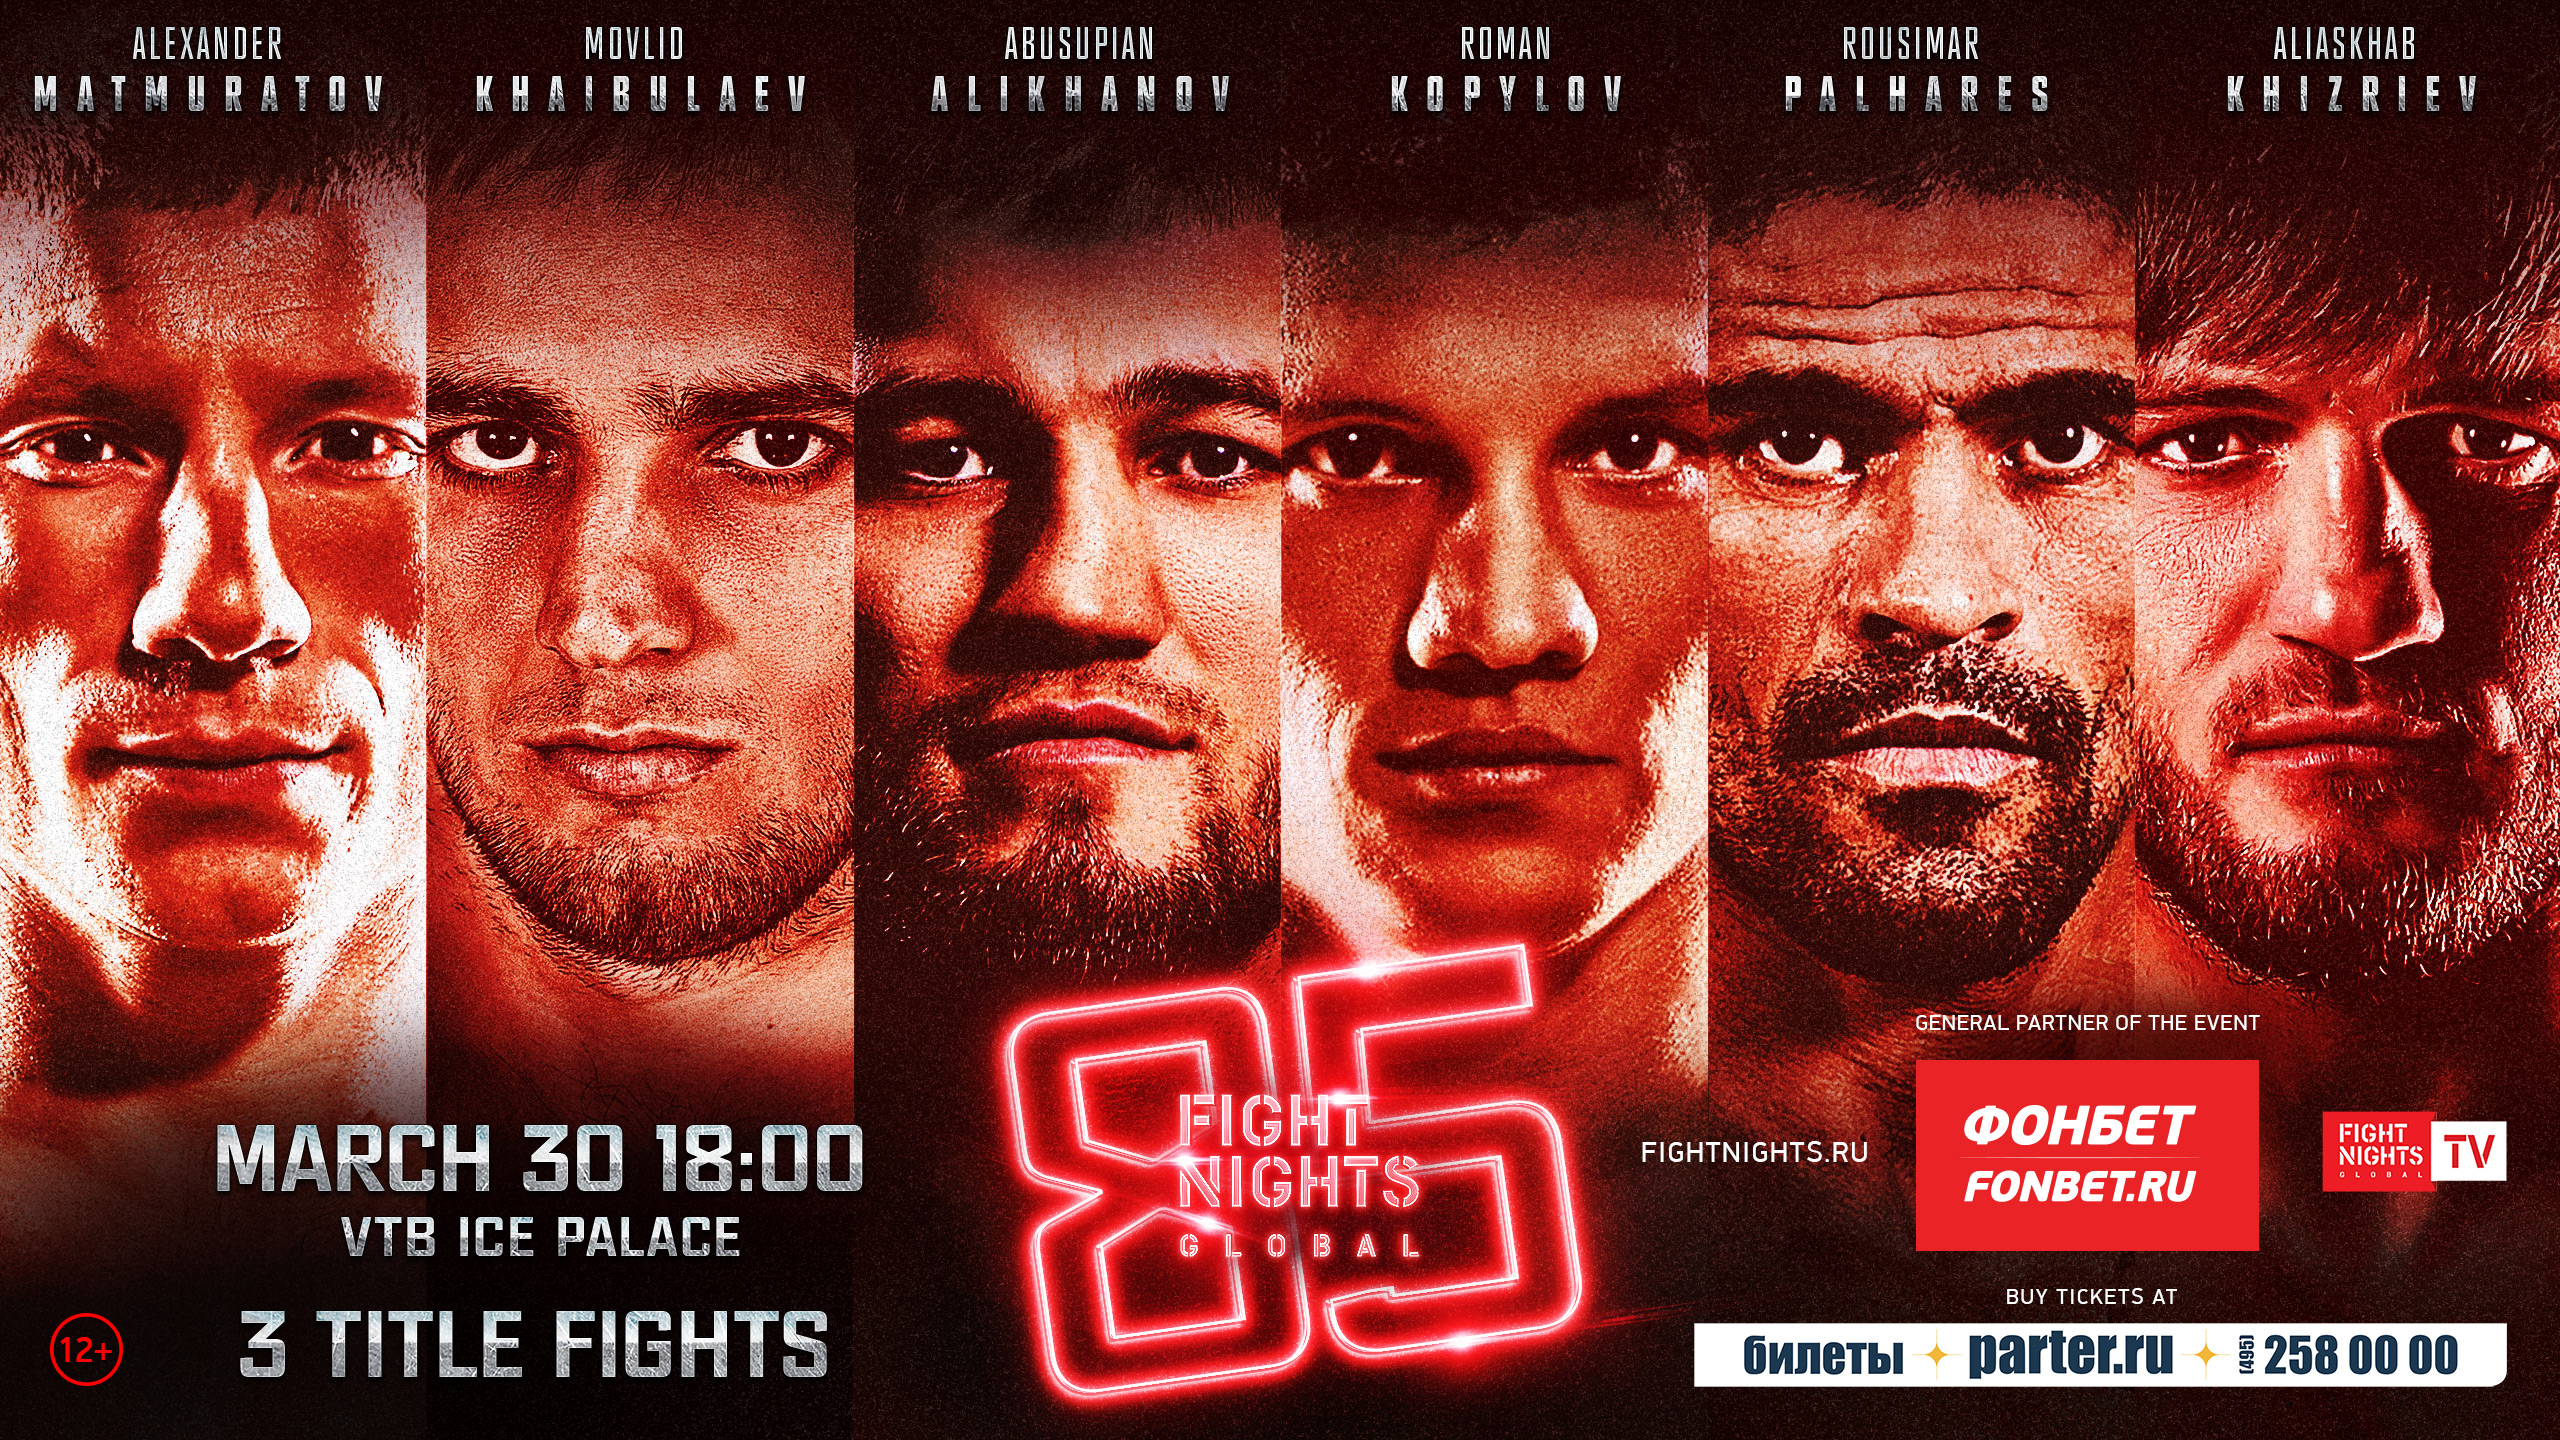 FIGHT NIGHTS GLOBAL 85